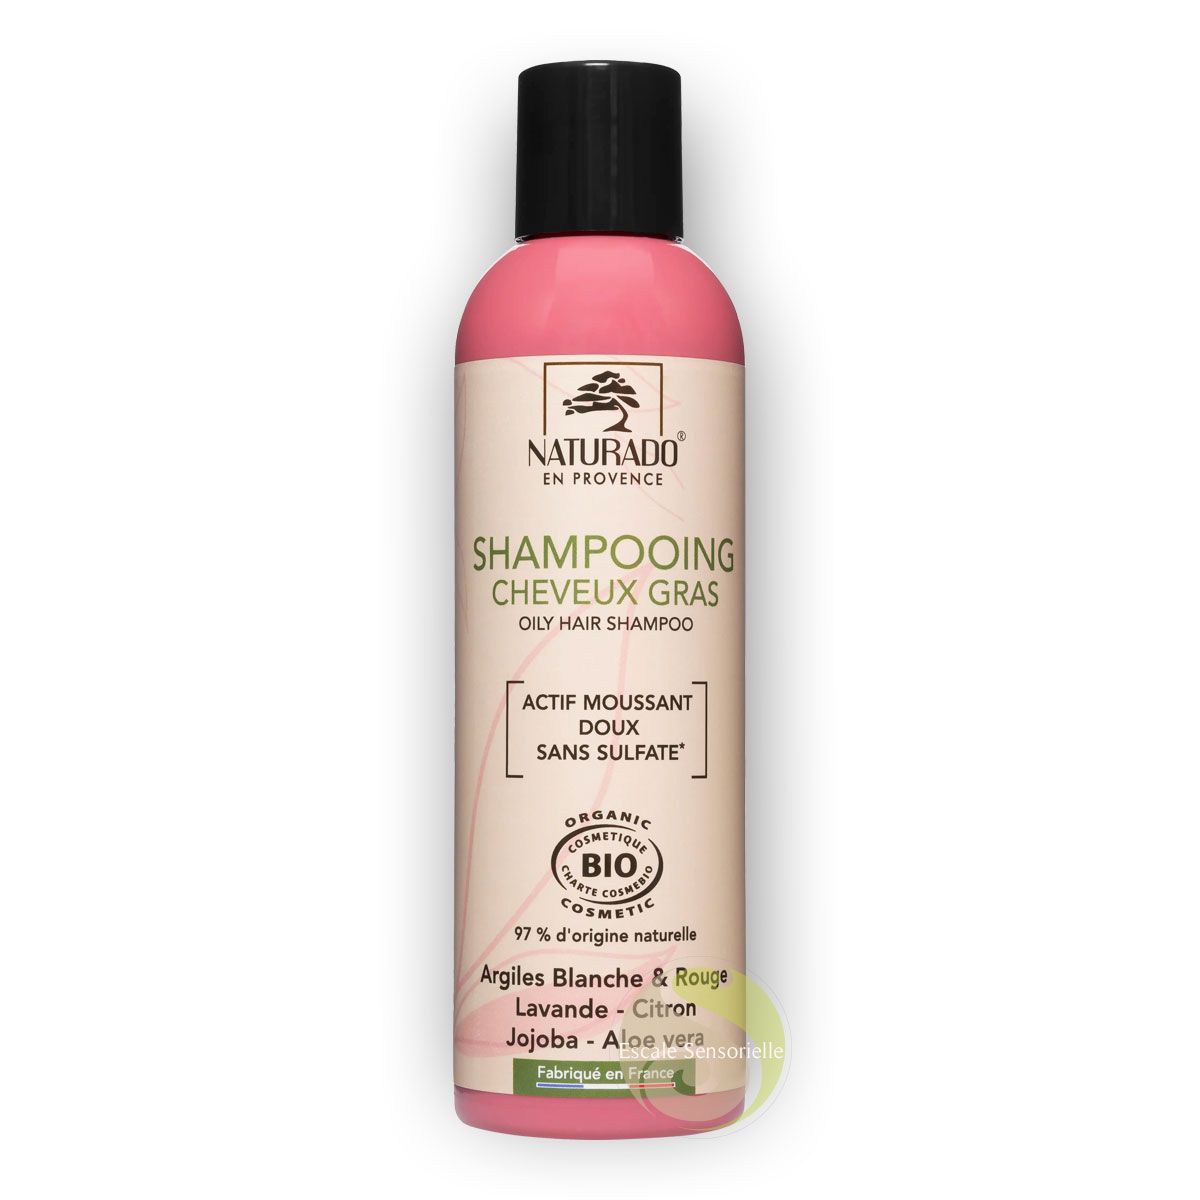 Shampooing cheveux gras bio Naturado sans sulfate nettoie et hydrate